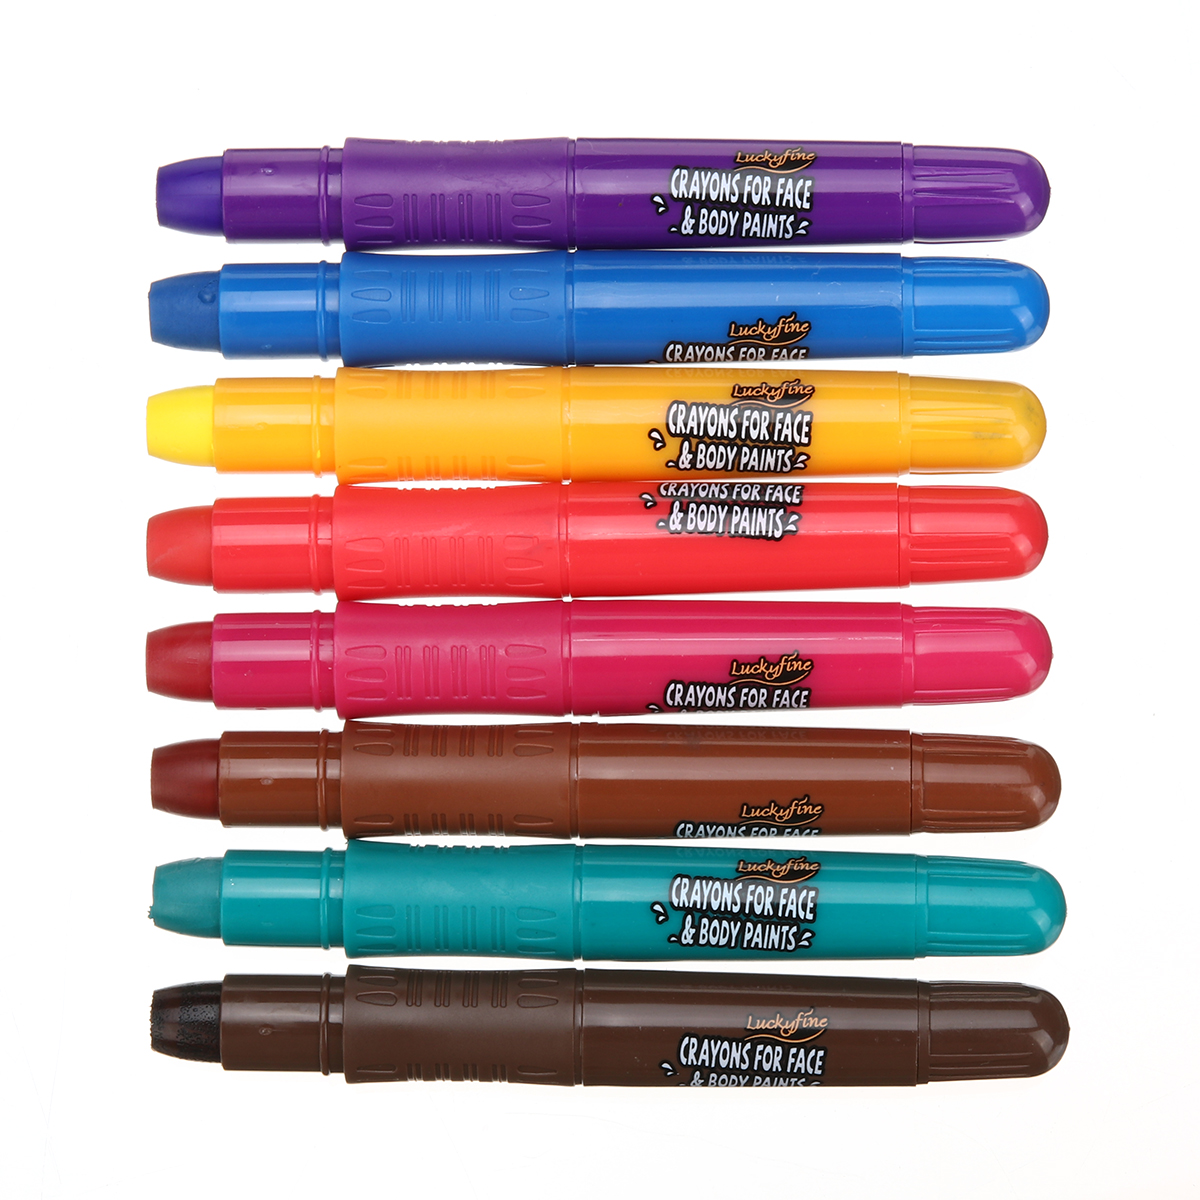 Painting Face Kit Crayons, Muscccm 16 Colors Non-Toxic Makeup Face